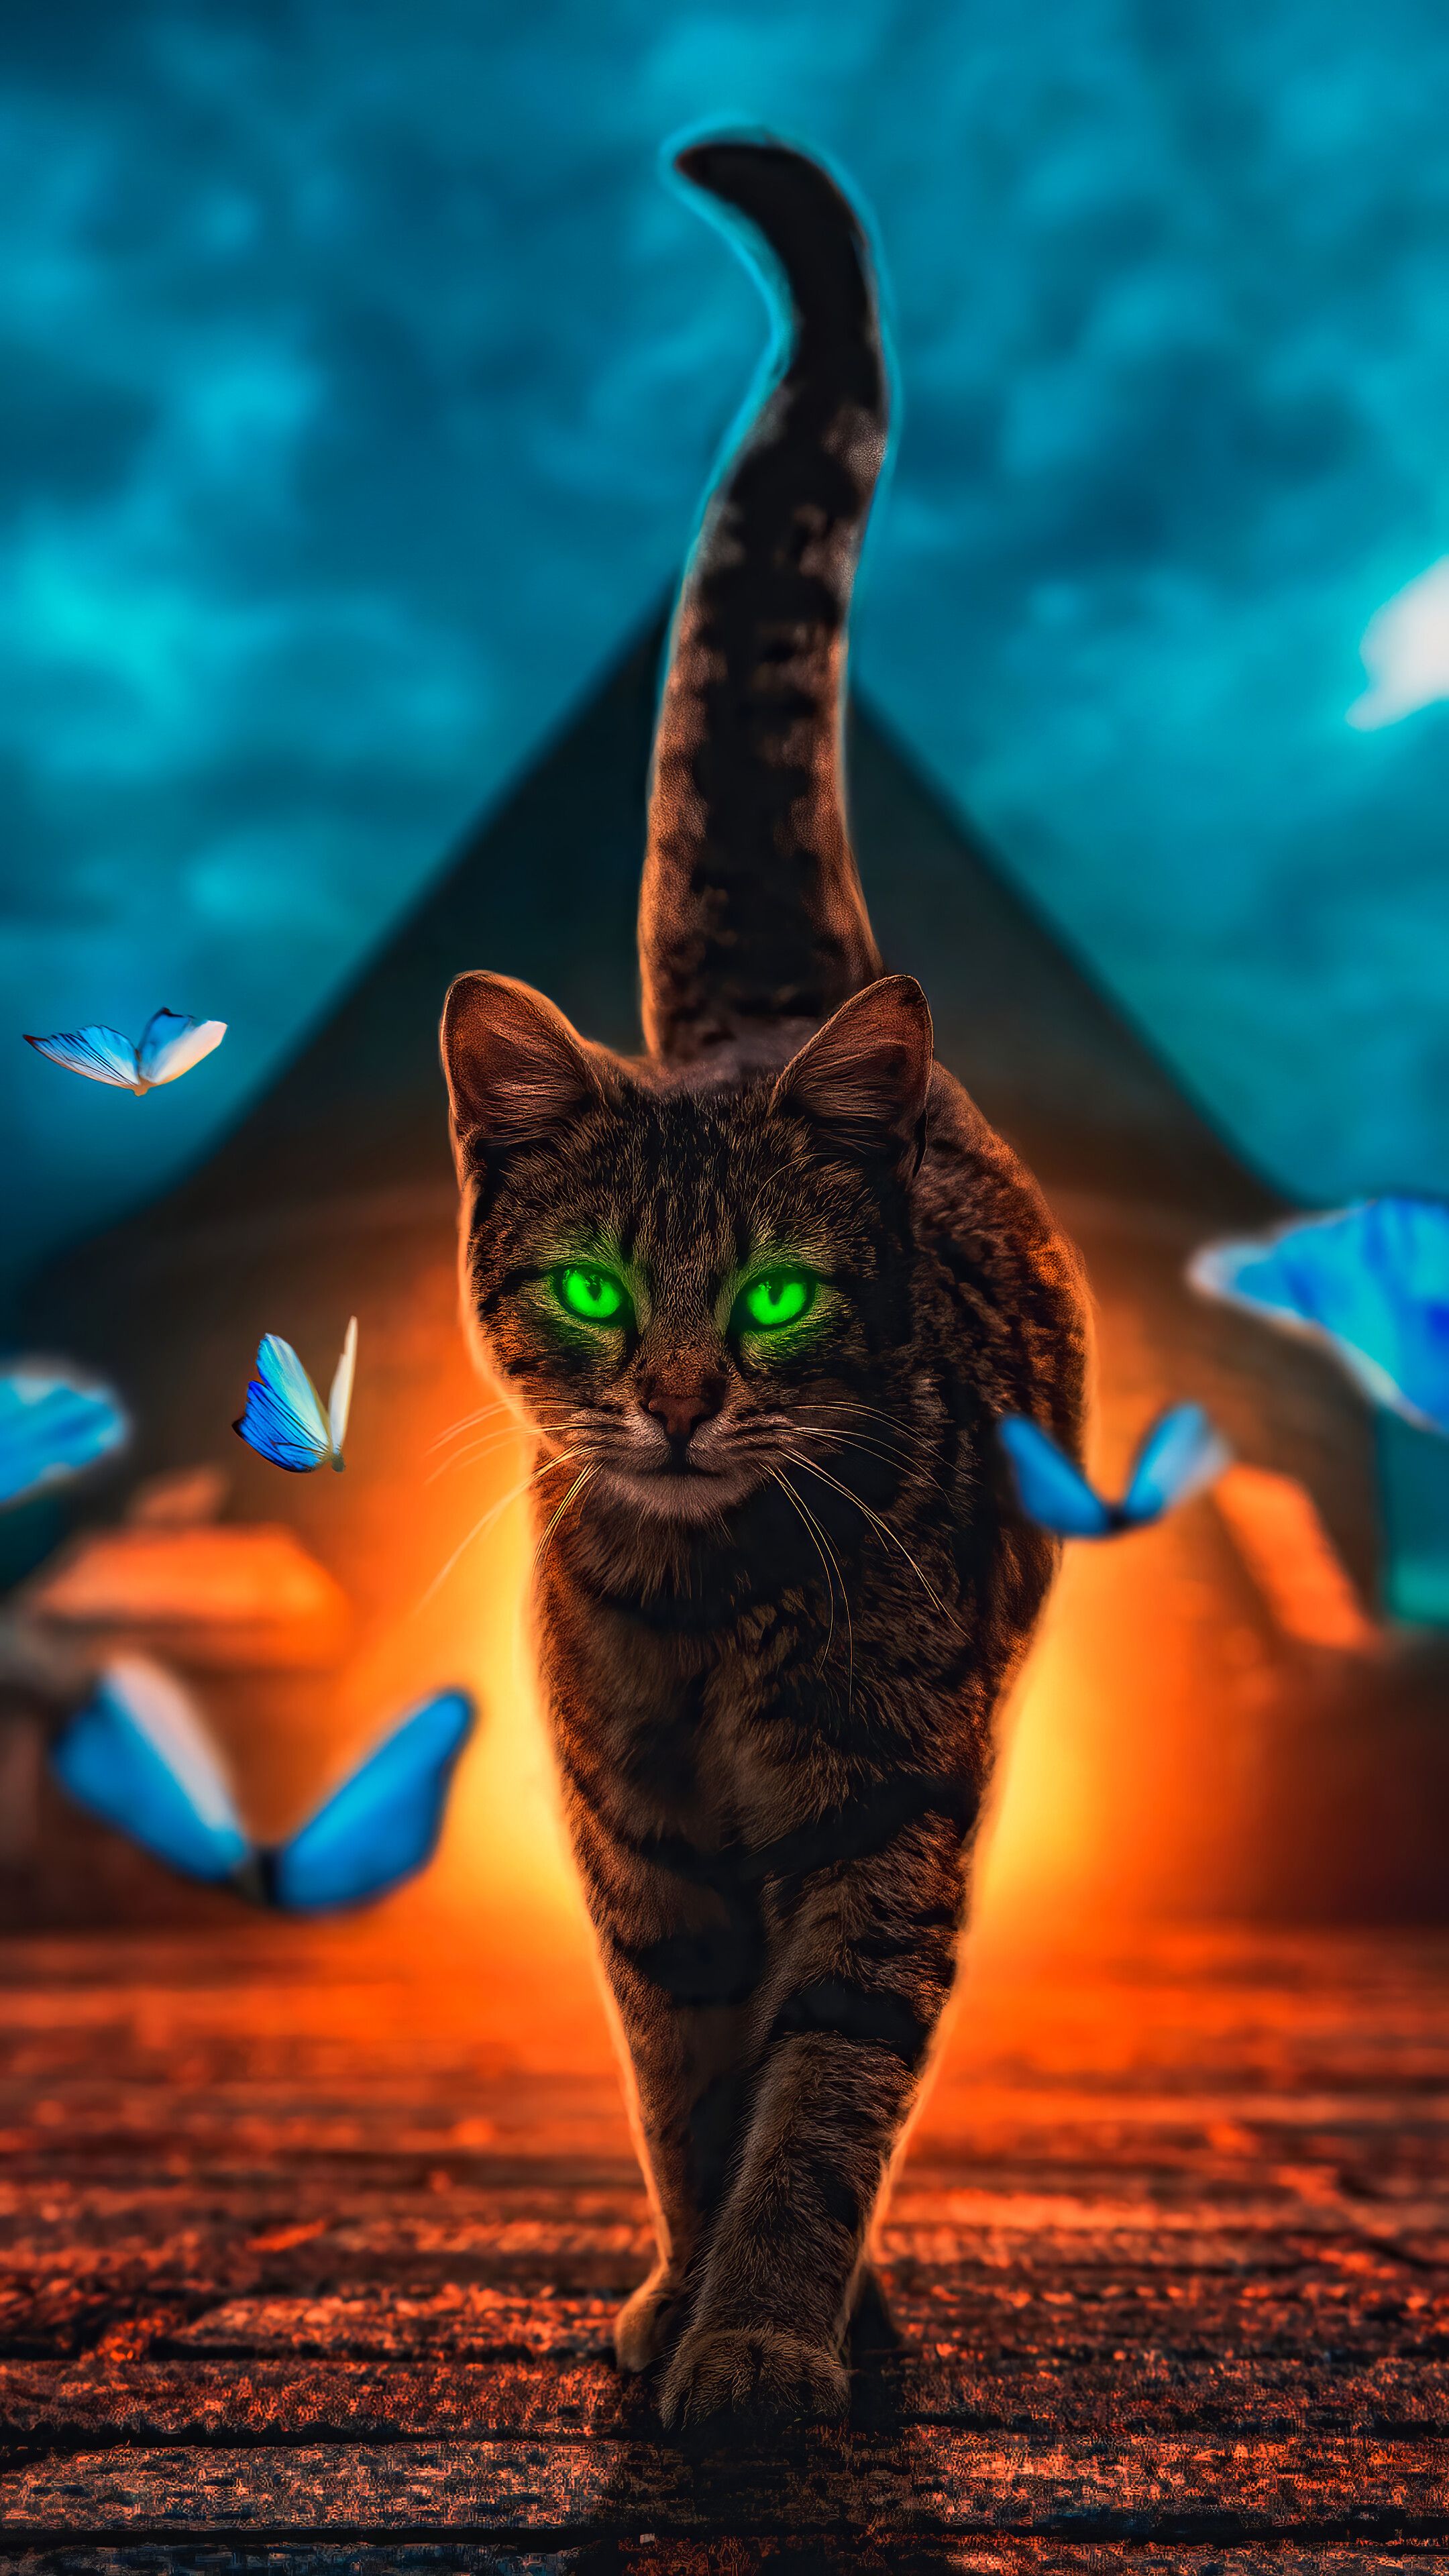 10 Best cat art desktop wallpaper You Can Get It Without A Penny ...